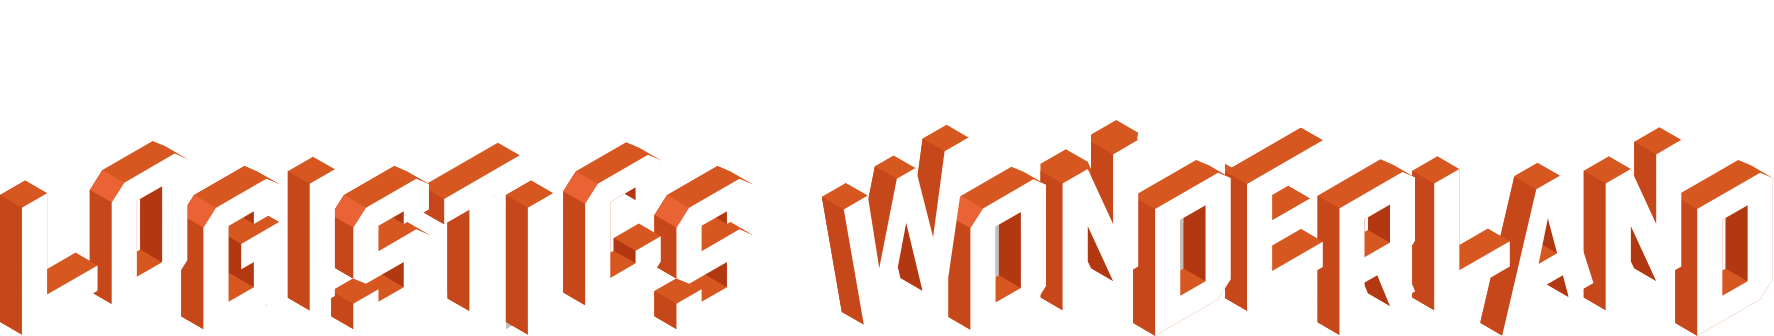 TRUSCO LOGISTICS WONDERLAND